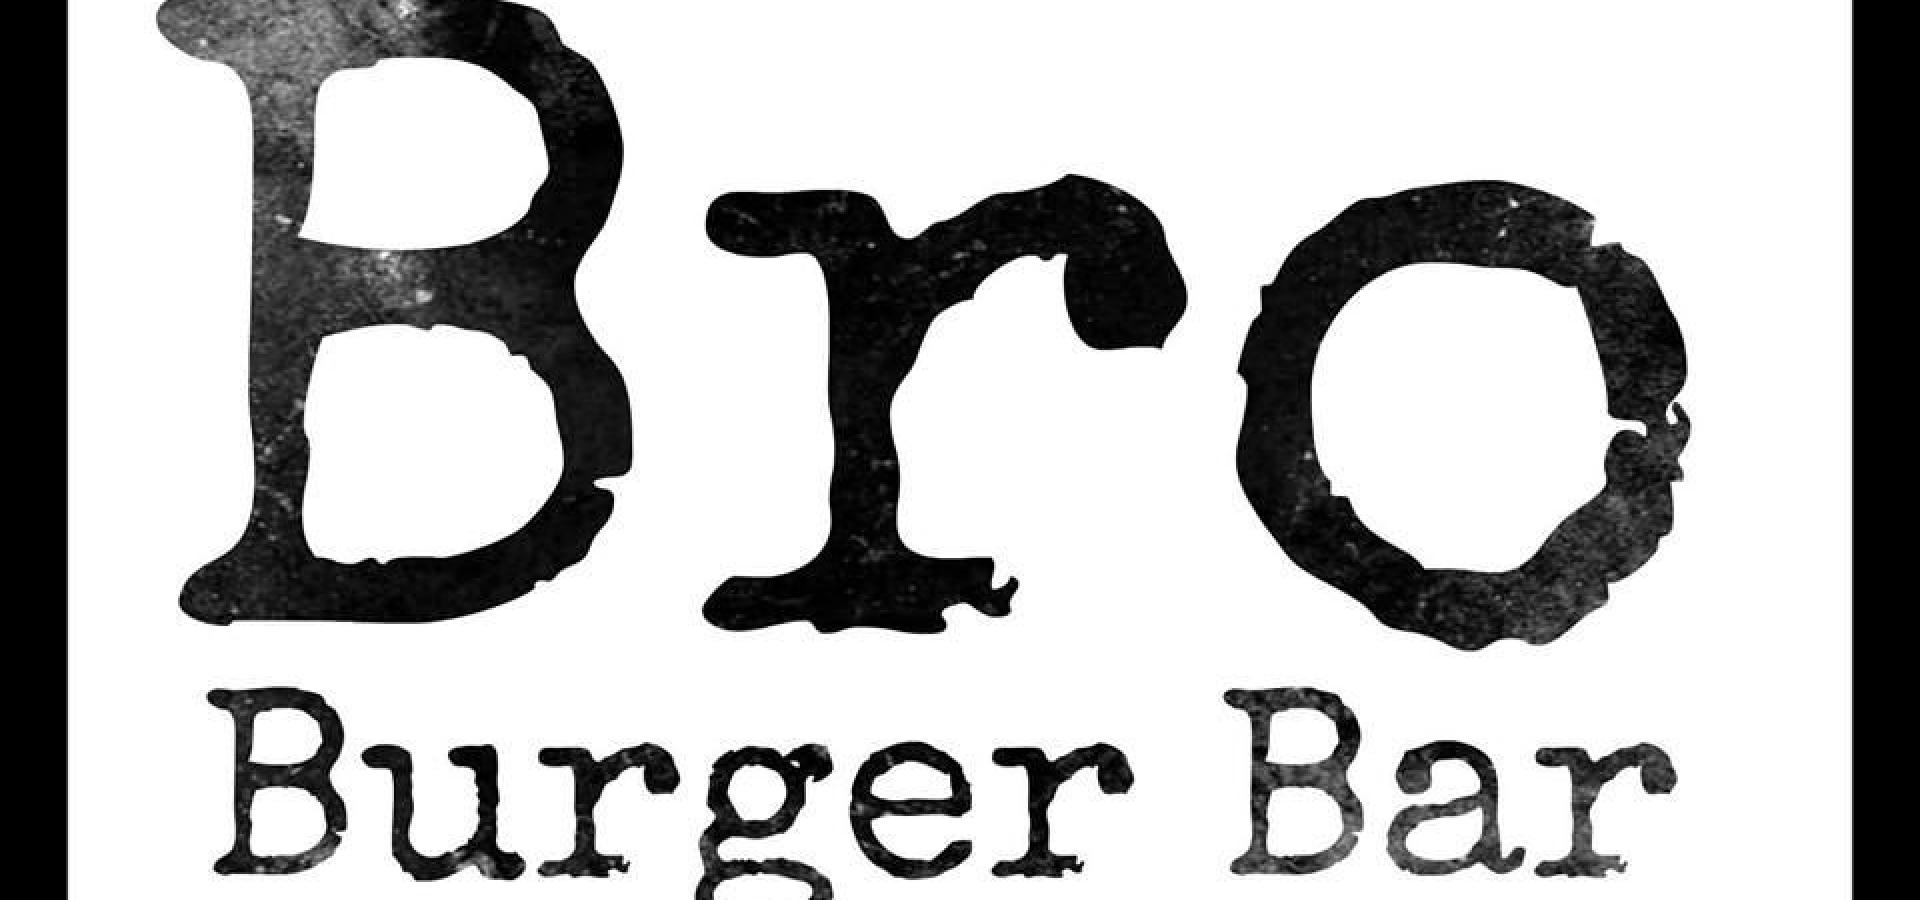 Bro Burger Bar